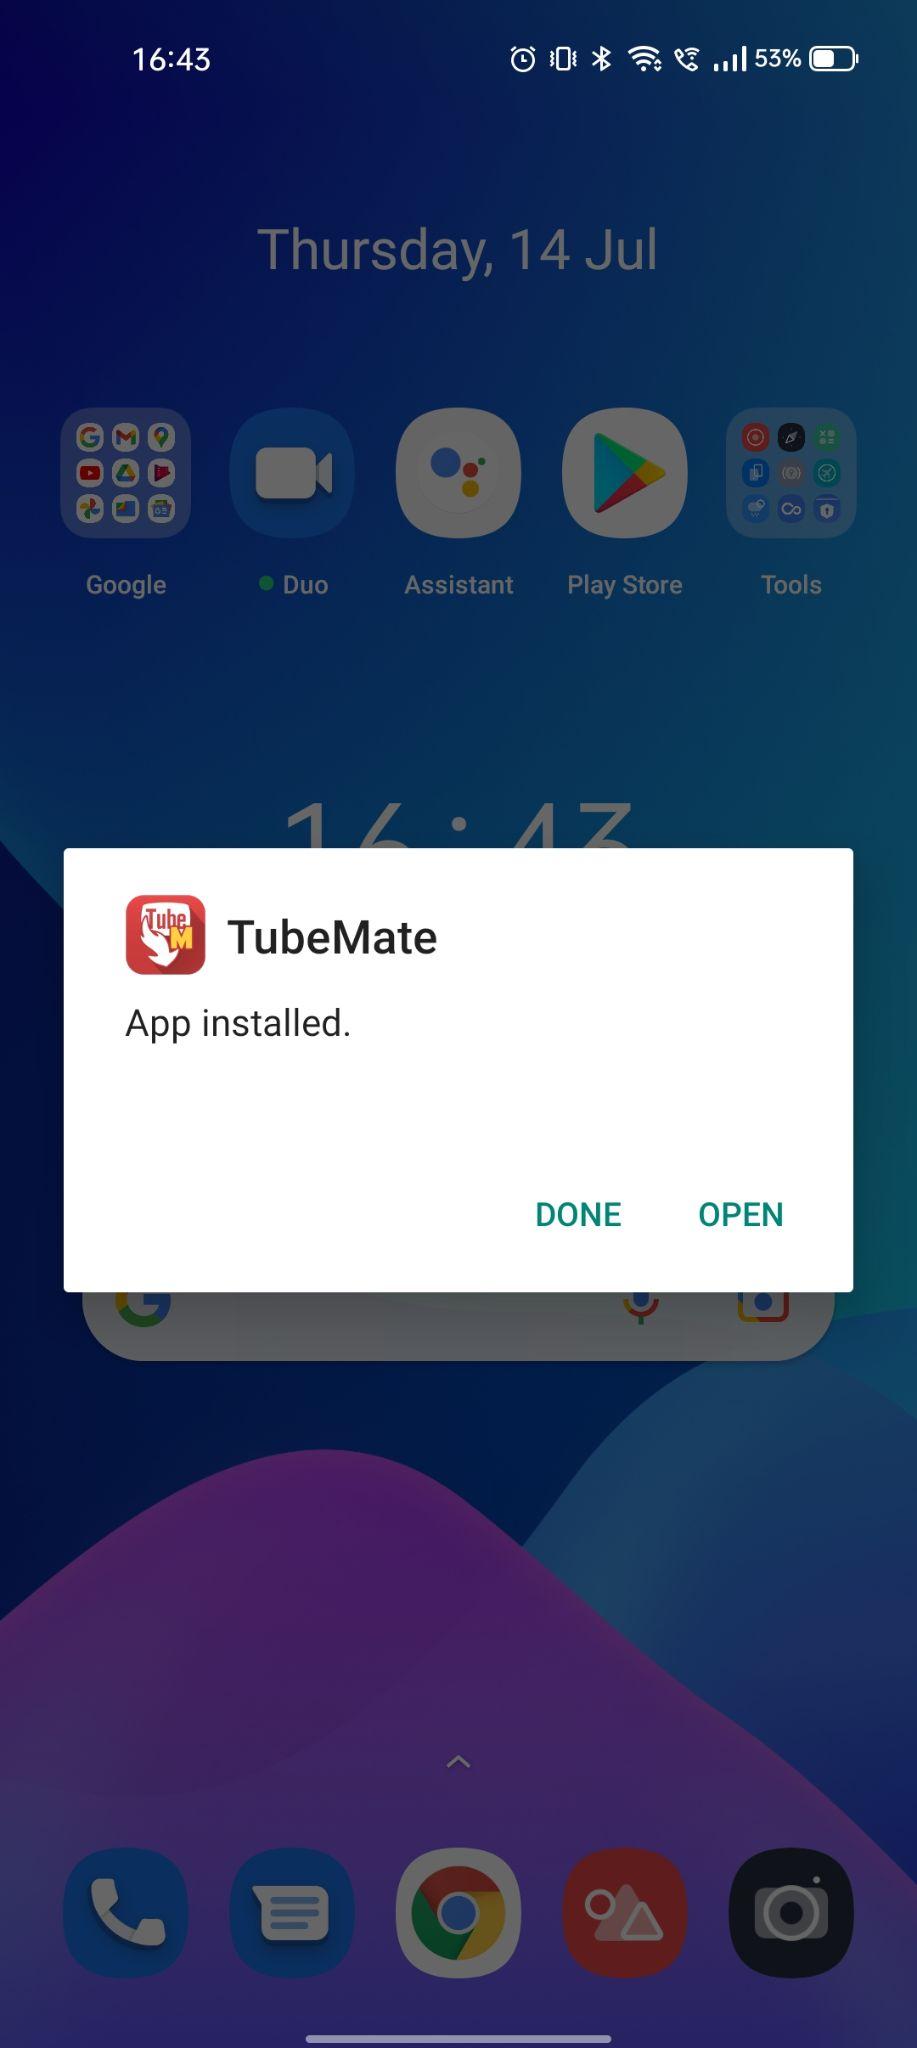 TubeMate apk installed